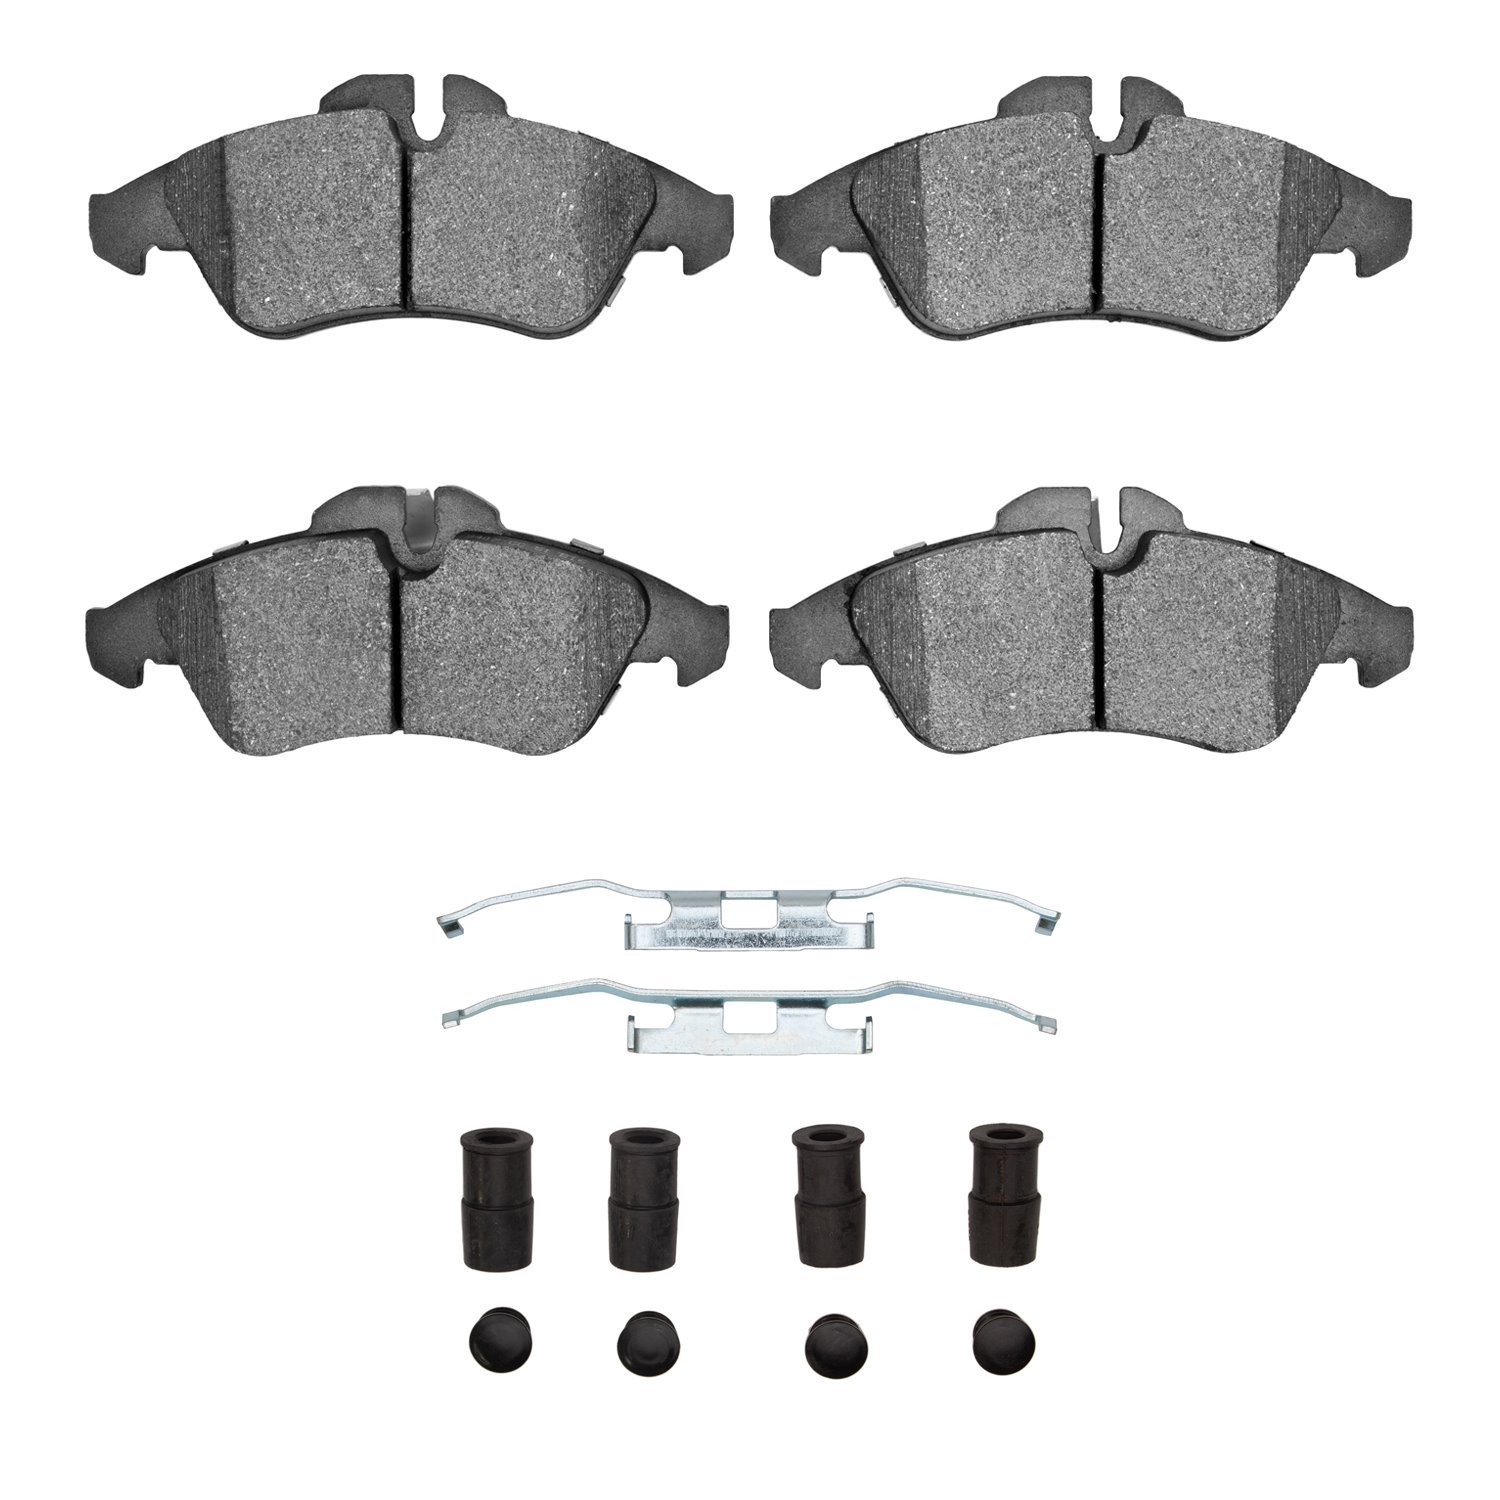 1551-1177-01 5000 Advanced Low-Metallic Brake Pads & Hardware Kit, 2002-2006 Multiple Makes/Models, Position: Fr,Front